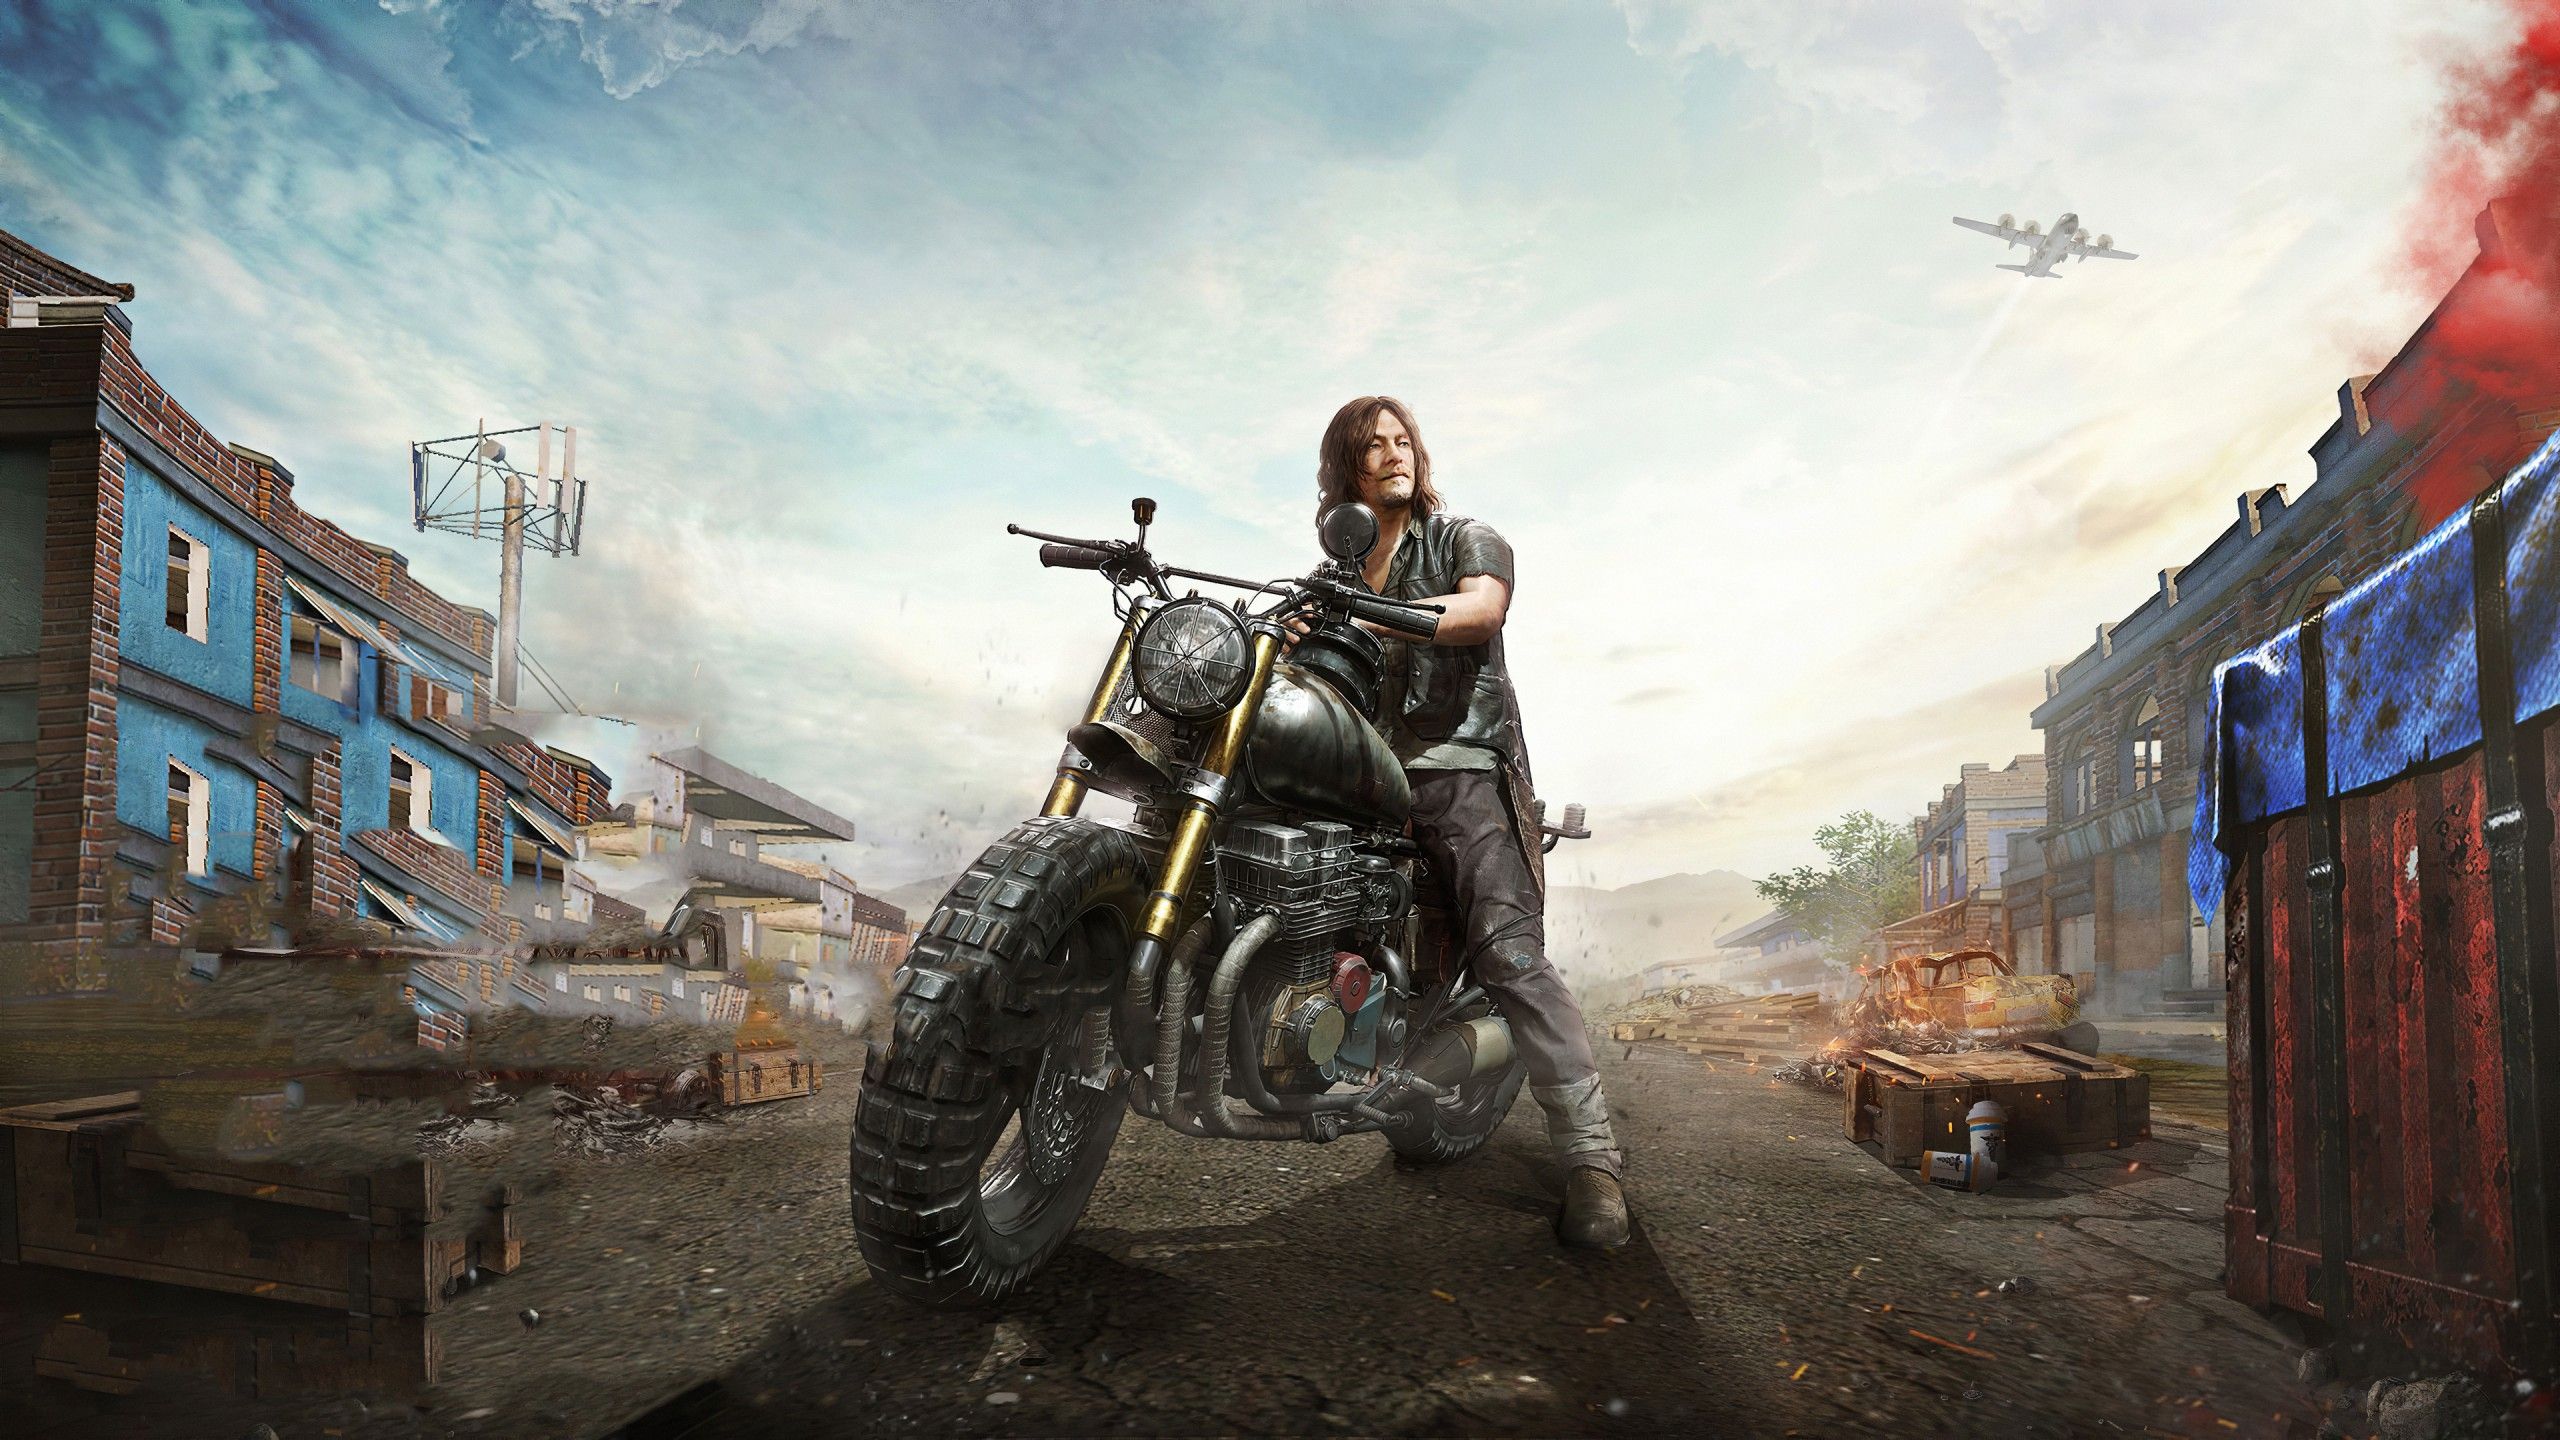 Daryl Dixon PUBG Mobile x The Walking Dead 4K Wallpaper